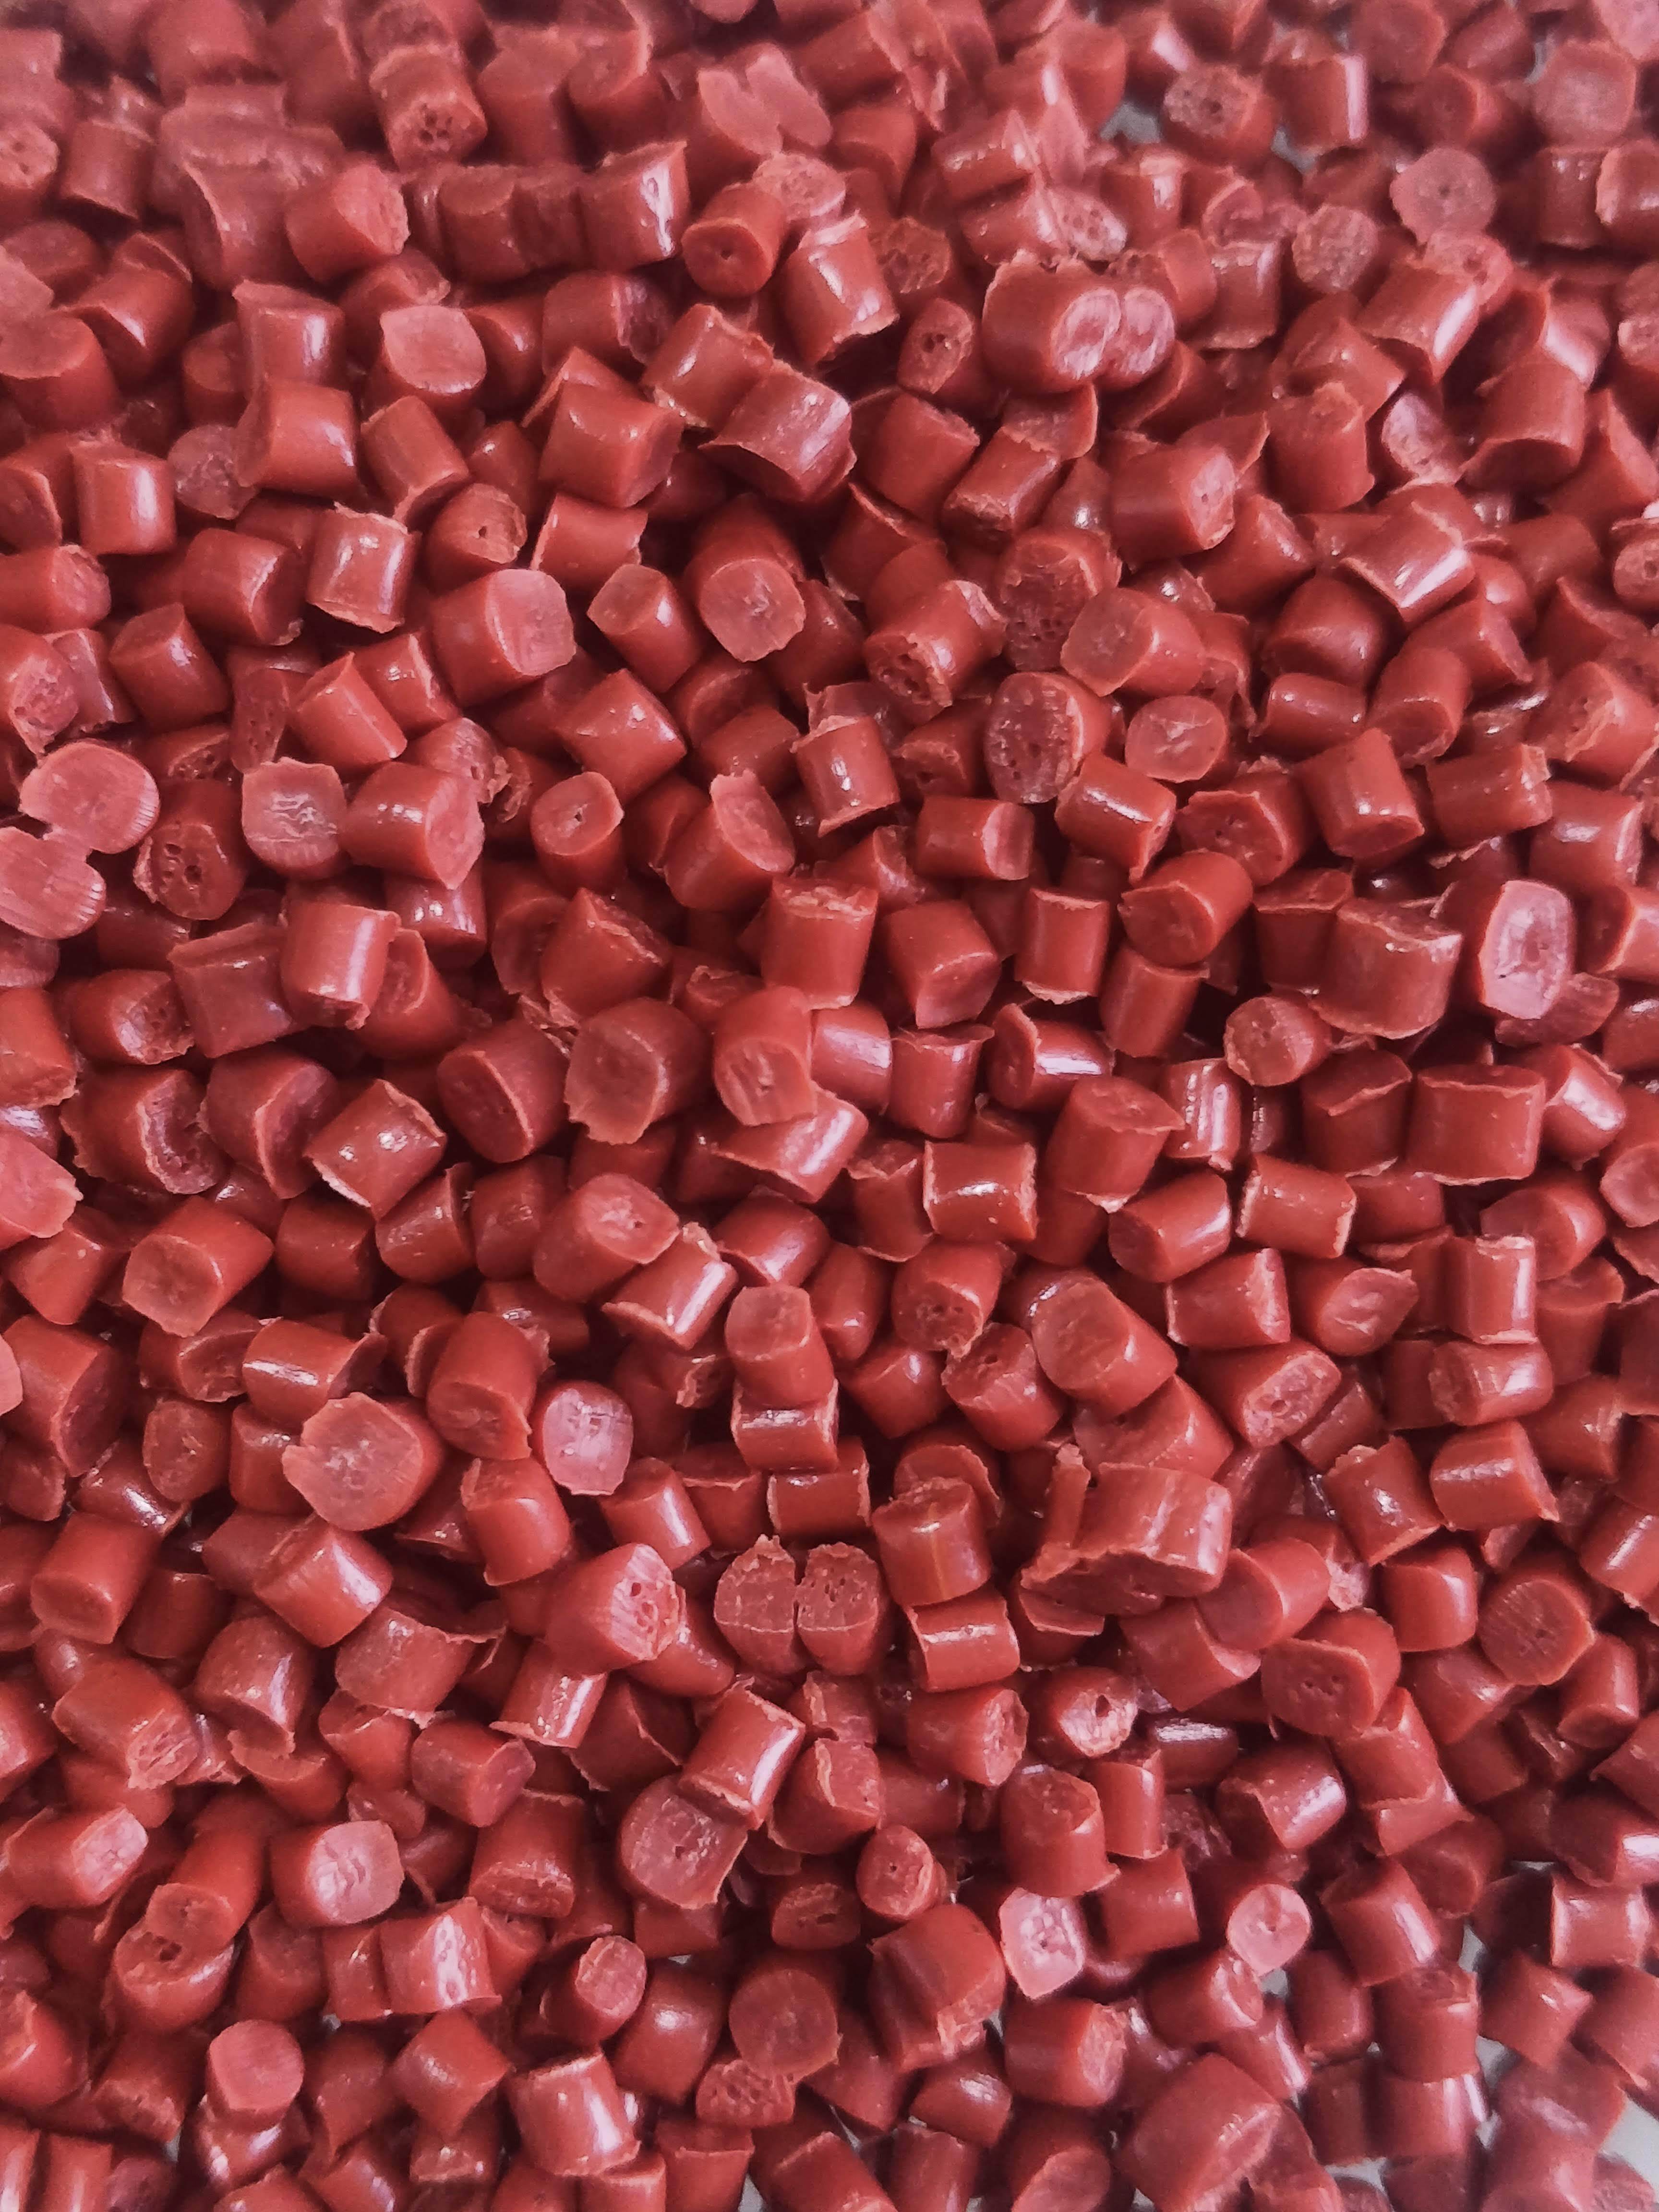 HDPE Crate Reprocess Granules Red